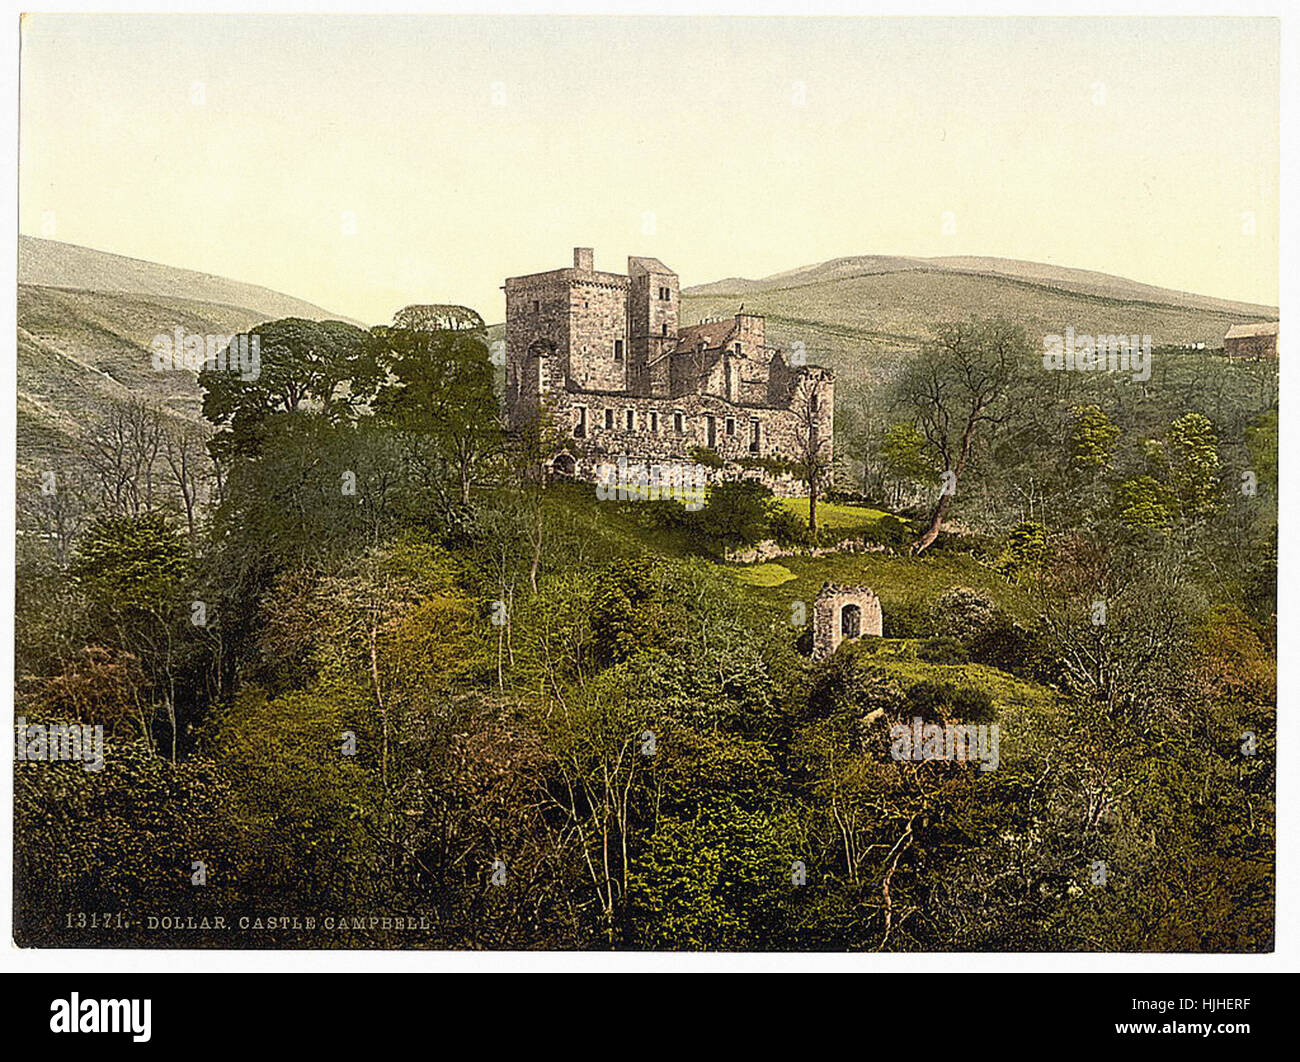 Castle Campbell, Dollaro, Scozia - Photochrom XIX SECOLO Foto Stock